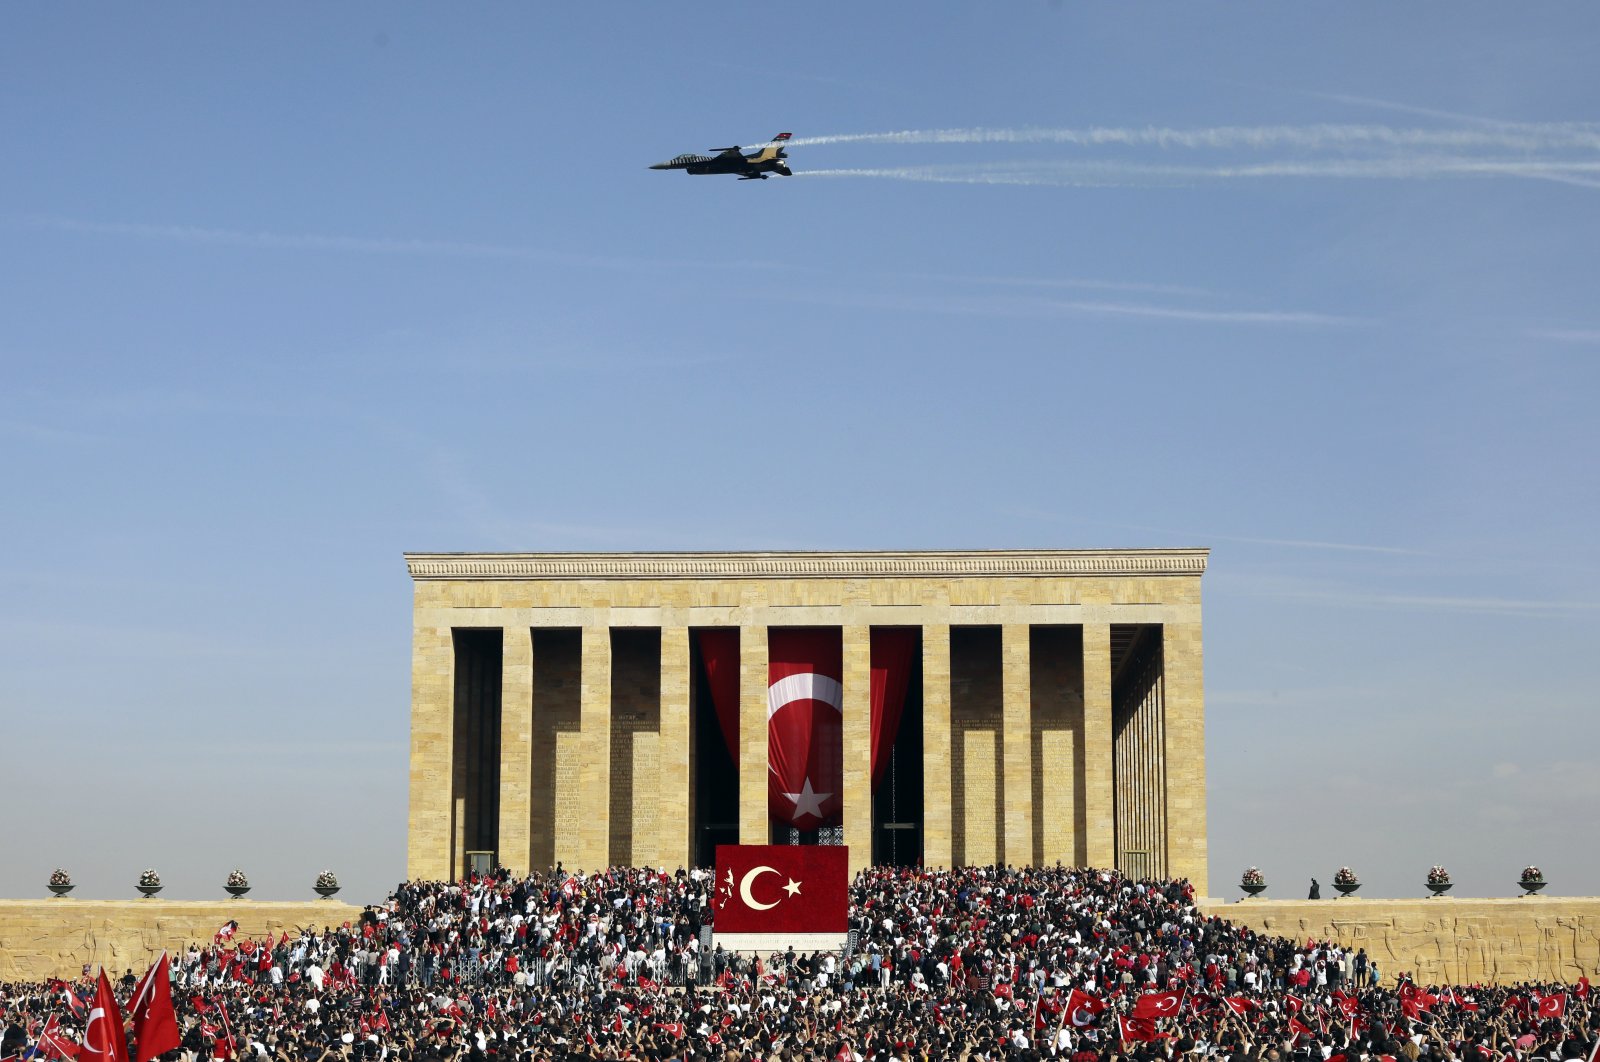 People gather outside Anıtkabir, the mausoleum of Mustafa Kemal Atatürk, watching the Turkish air force show as part of celebrations marking the 100th anniversary of the republic, in the capital Ankara, Türkiye, Oct. 29, 2023. (AP Photo)